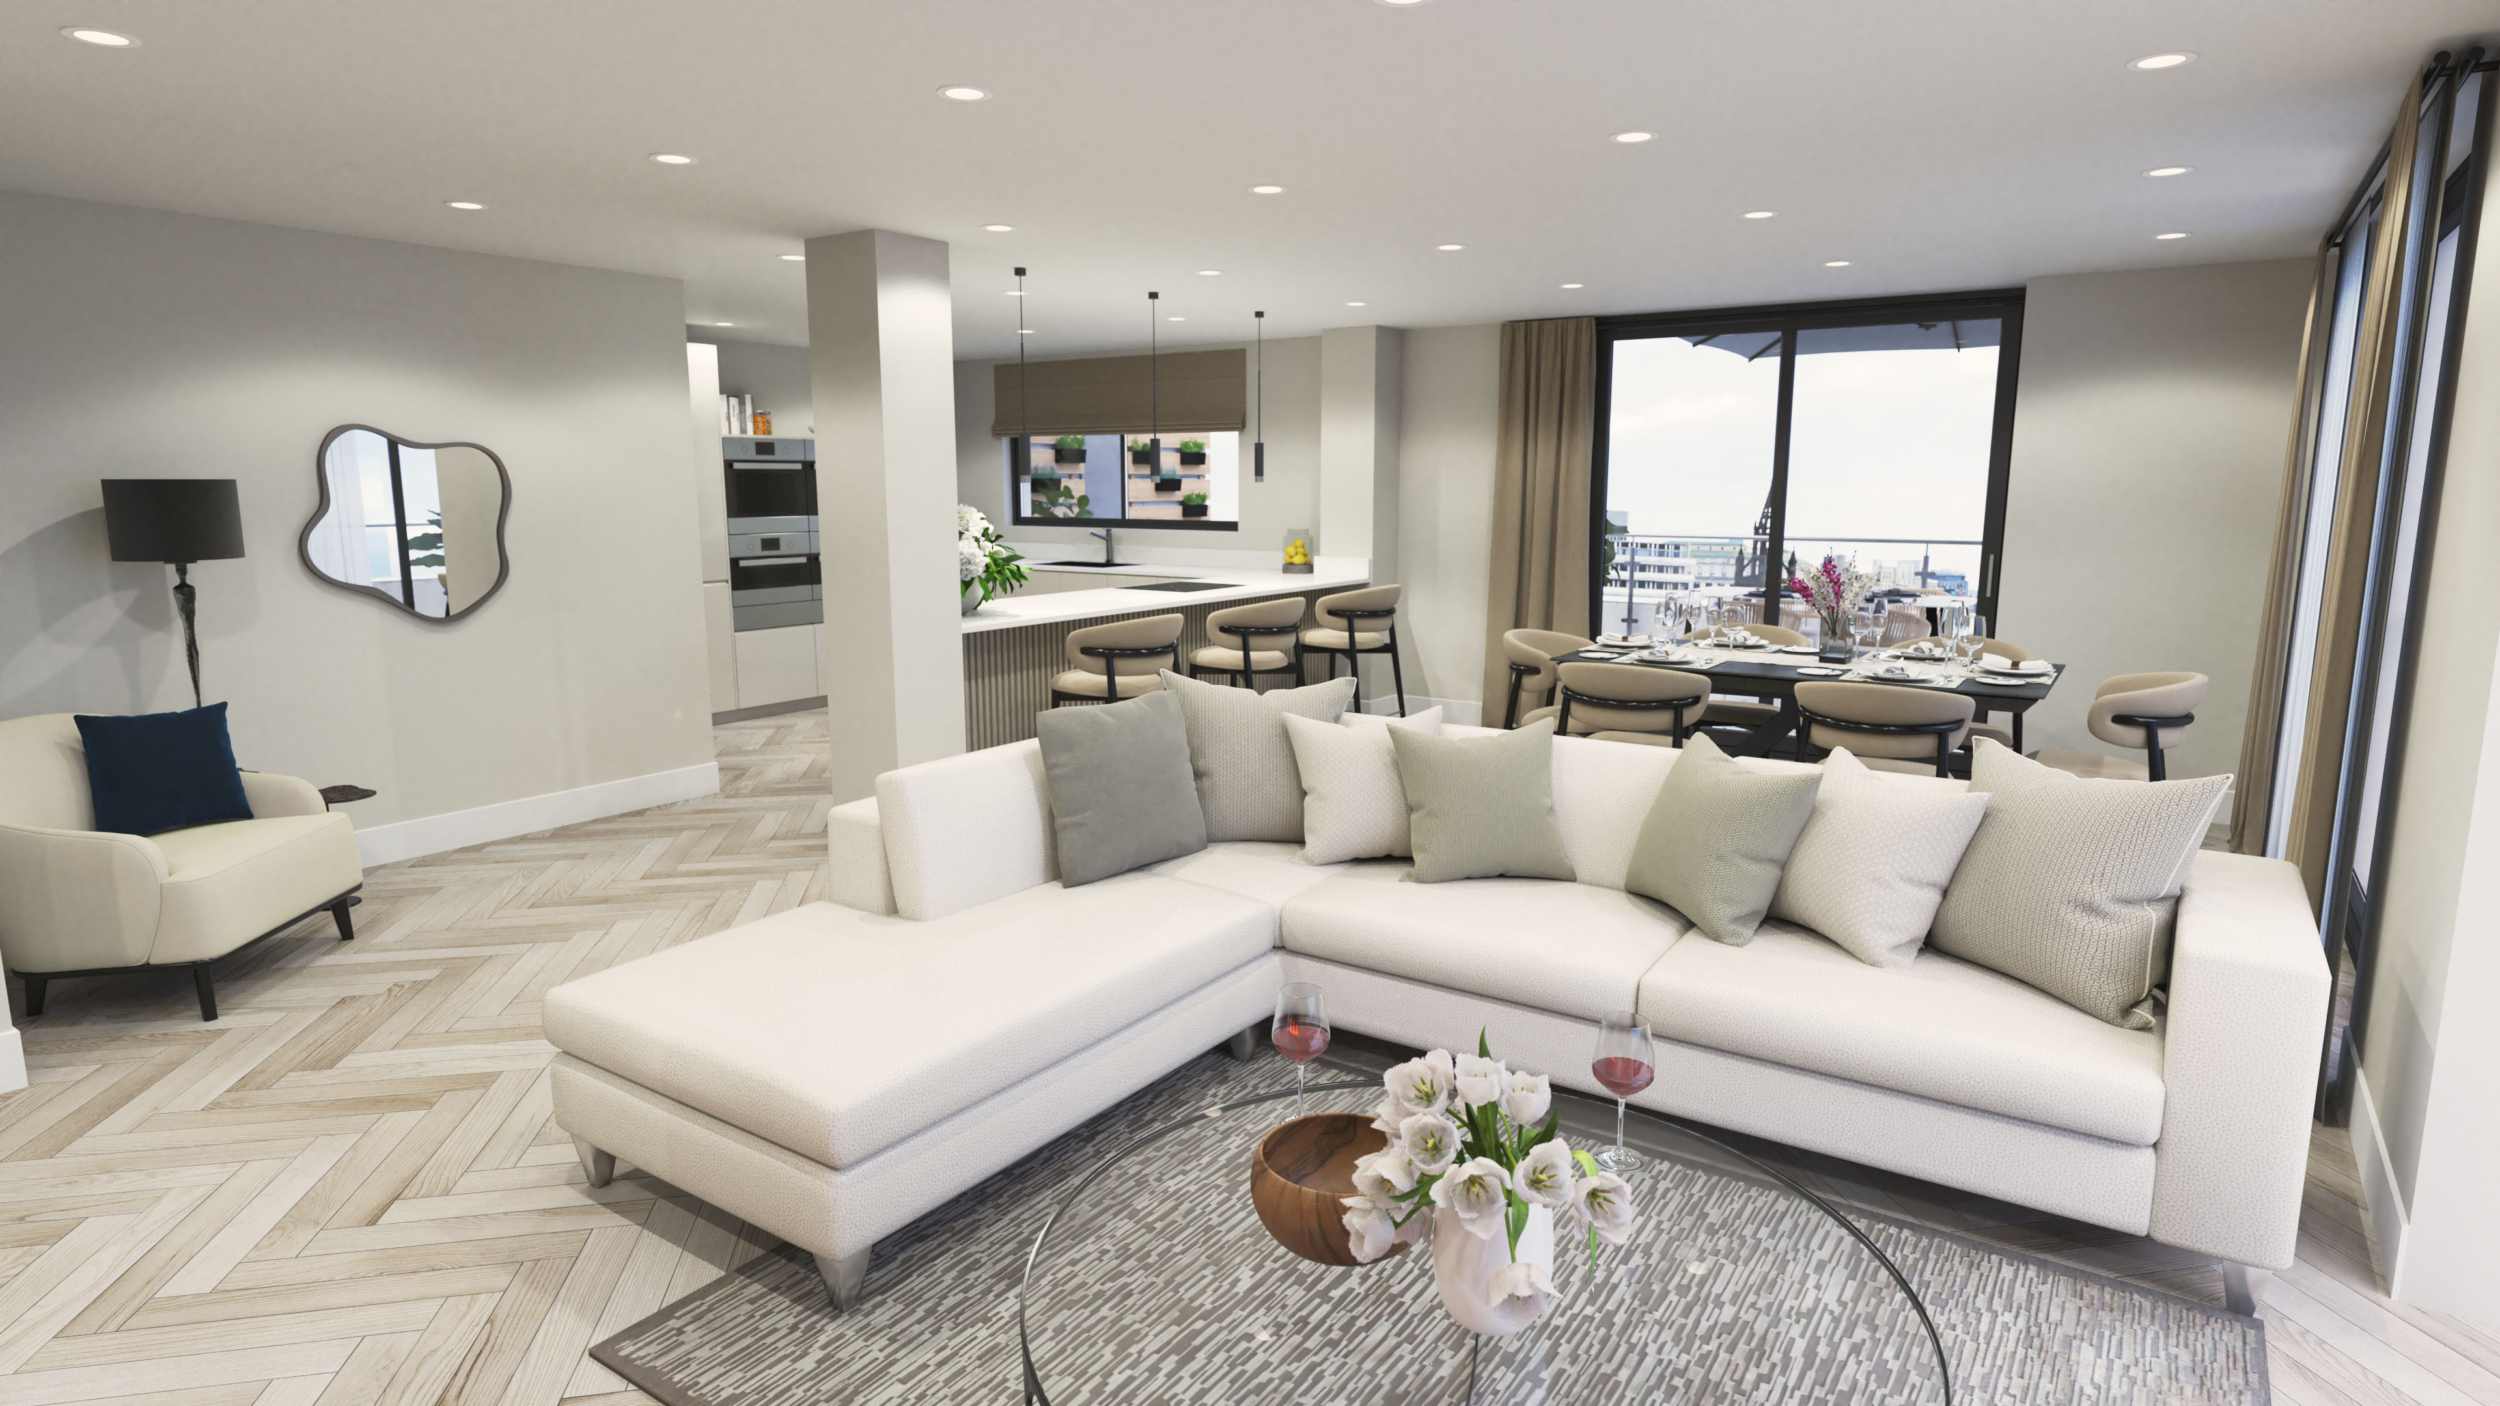 Luxury Penthouse Apartment, Living Space CGI, Linear CGI Studio